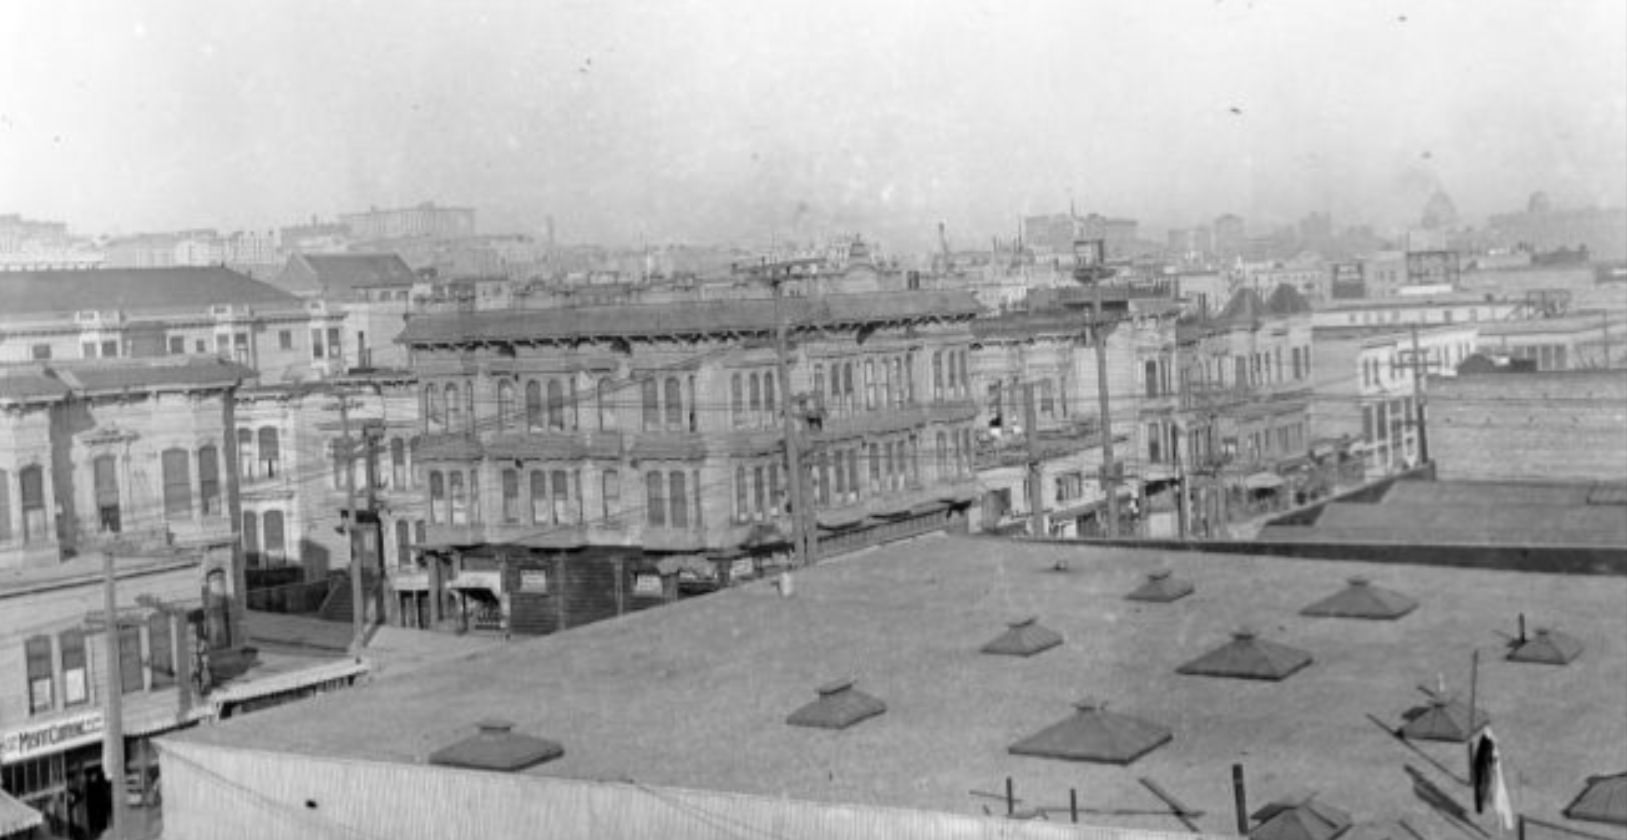 View of McAllister Street from the roof of John Swett School, 1909